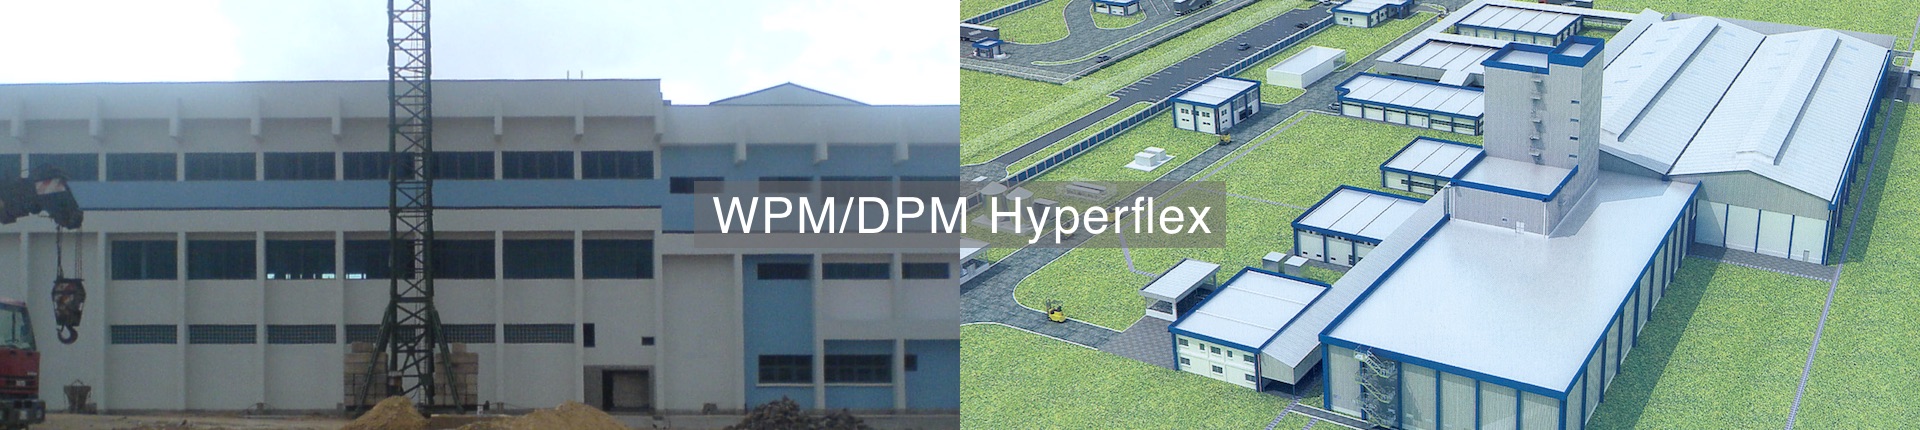 WPM/DPM Hyperflex